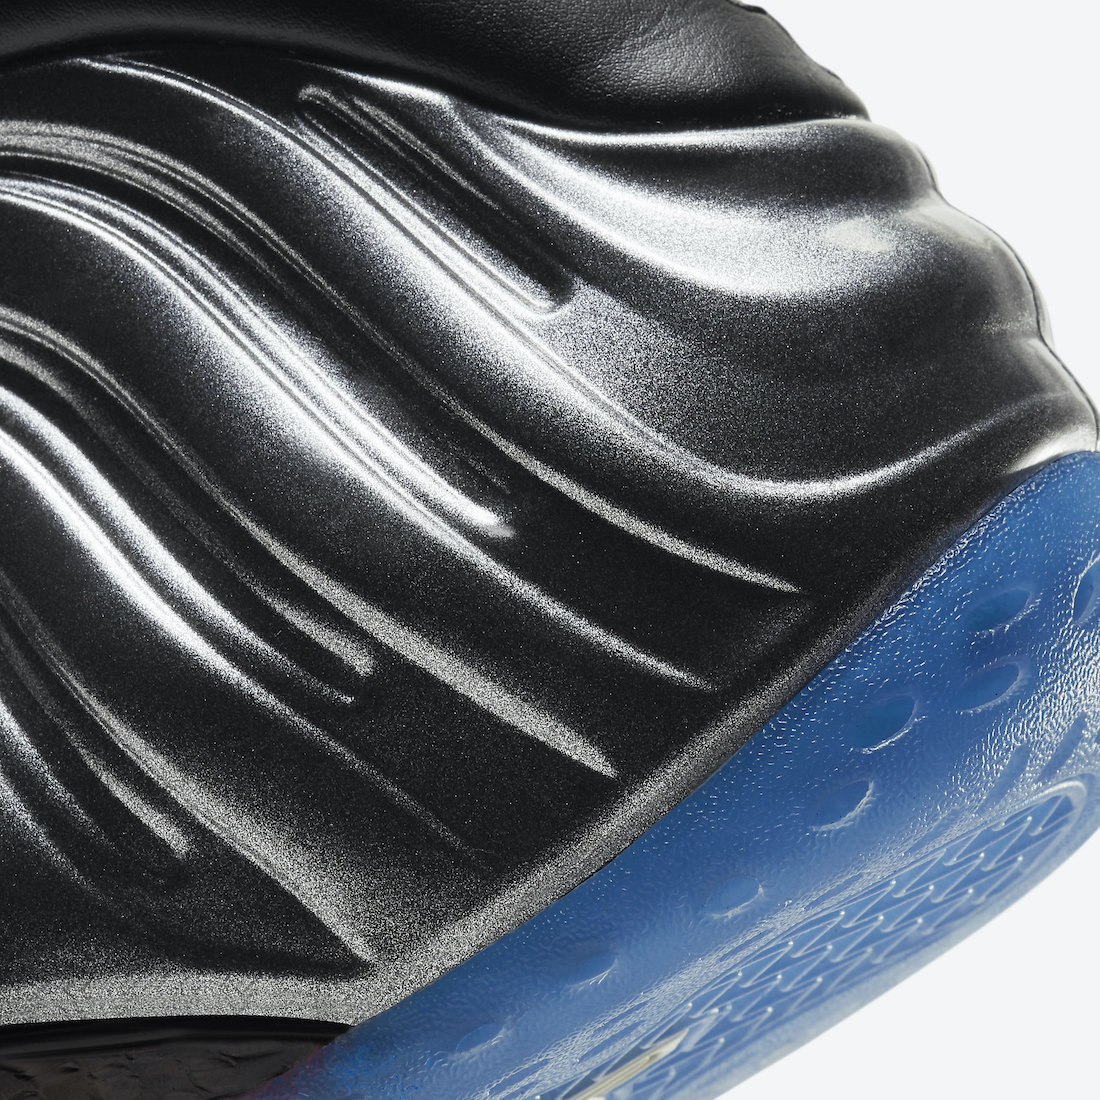 Nike Air Foamposite One Gradient Soles CU8063-001 Release Date